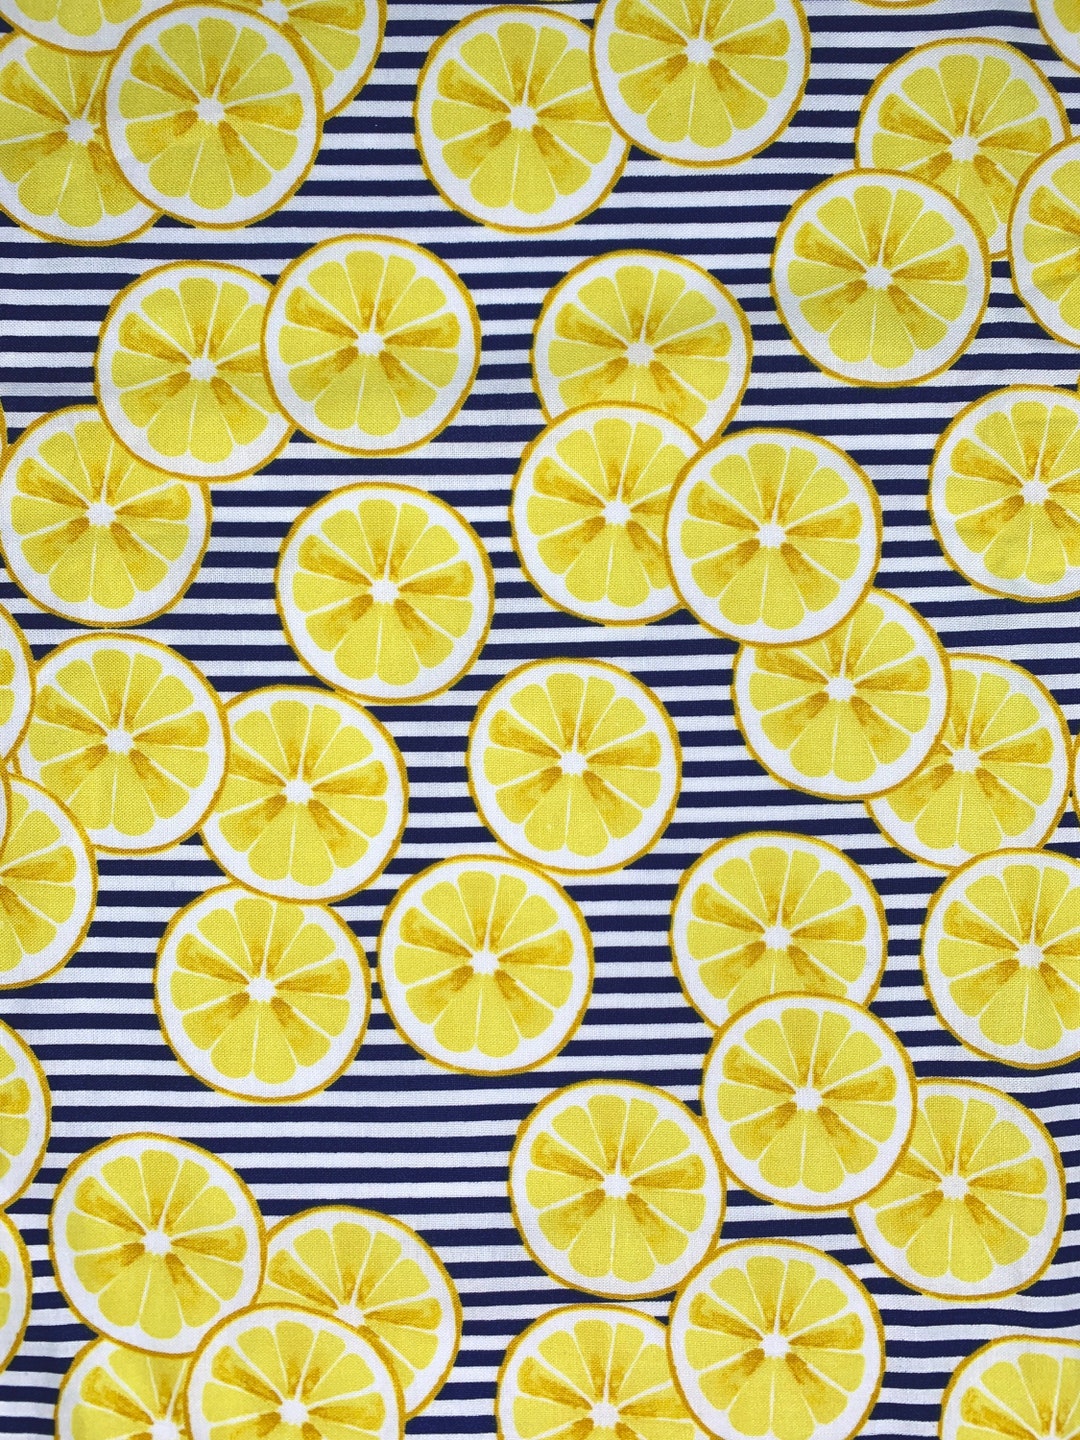 Sliced Lemons on Navy Stripes Cotton Fabric - Etsy